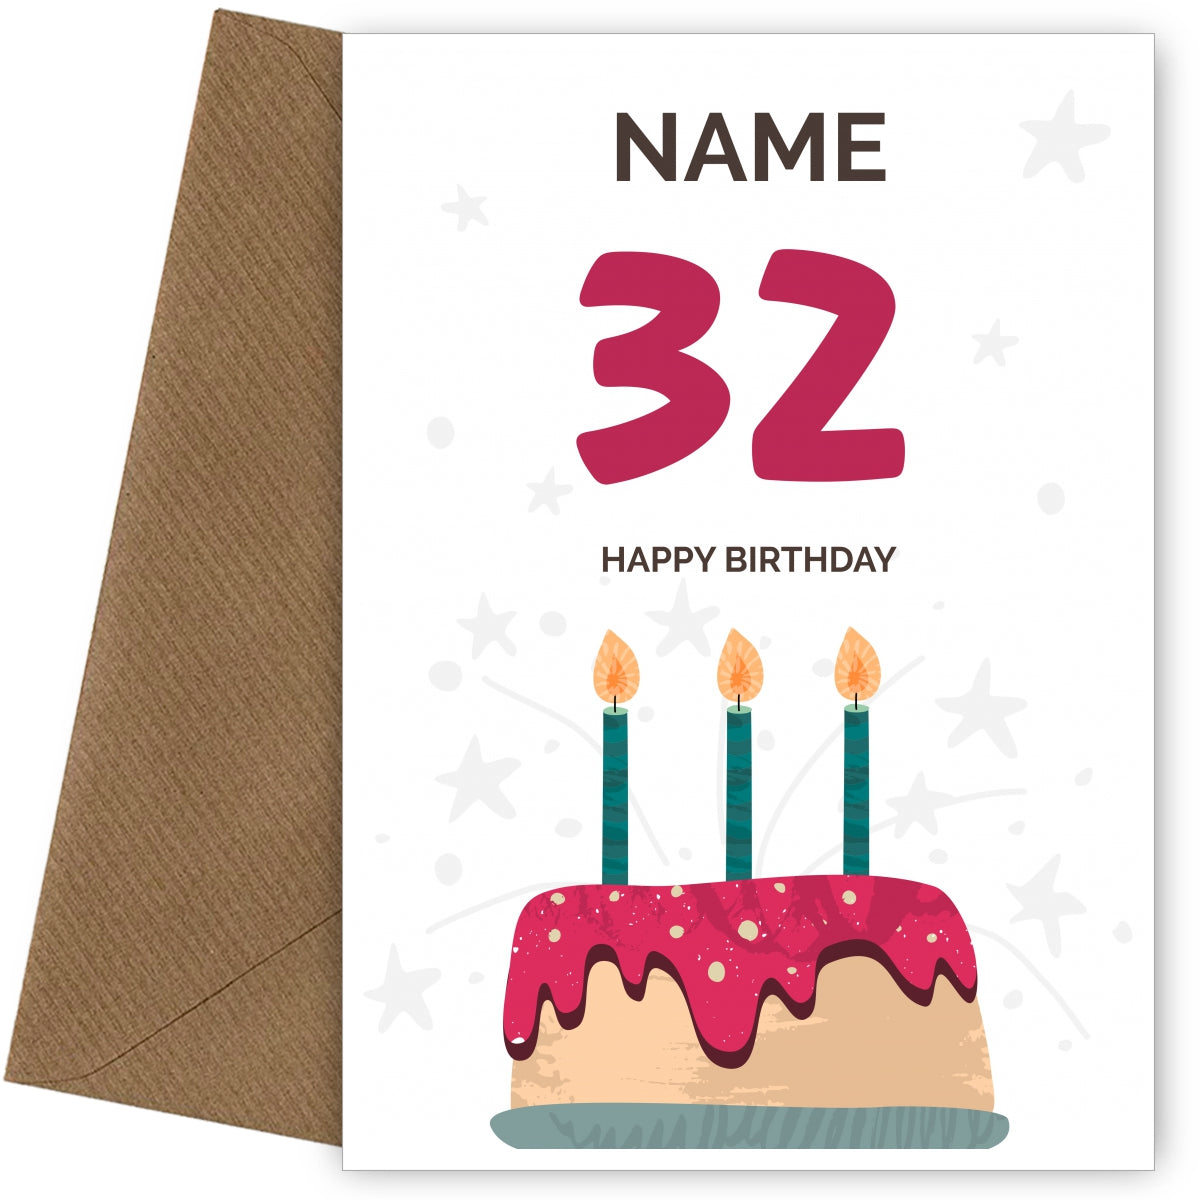 Happy 32nd Birthday Card - Fun Birthday Cake Design